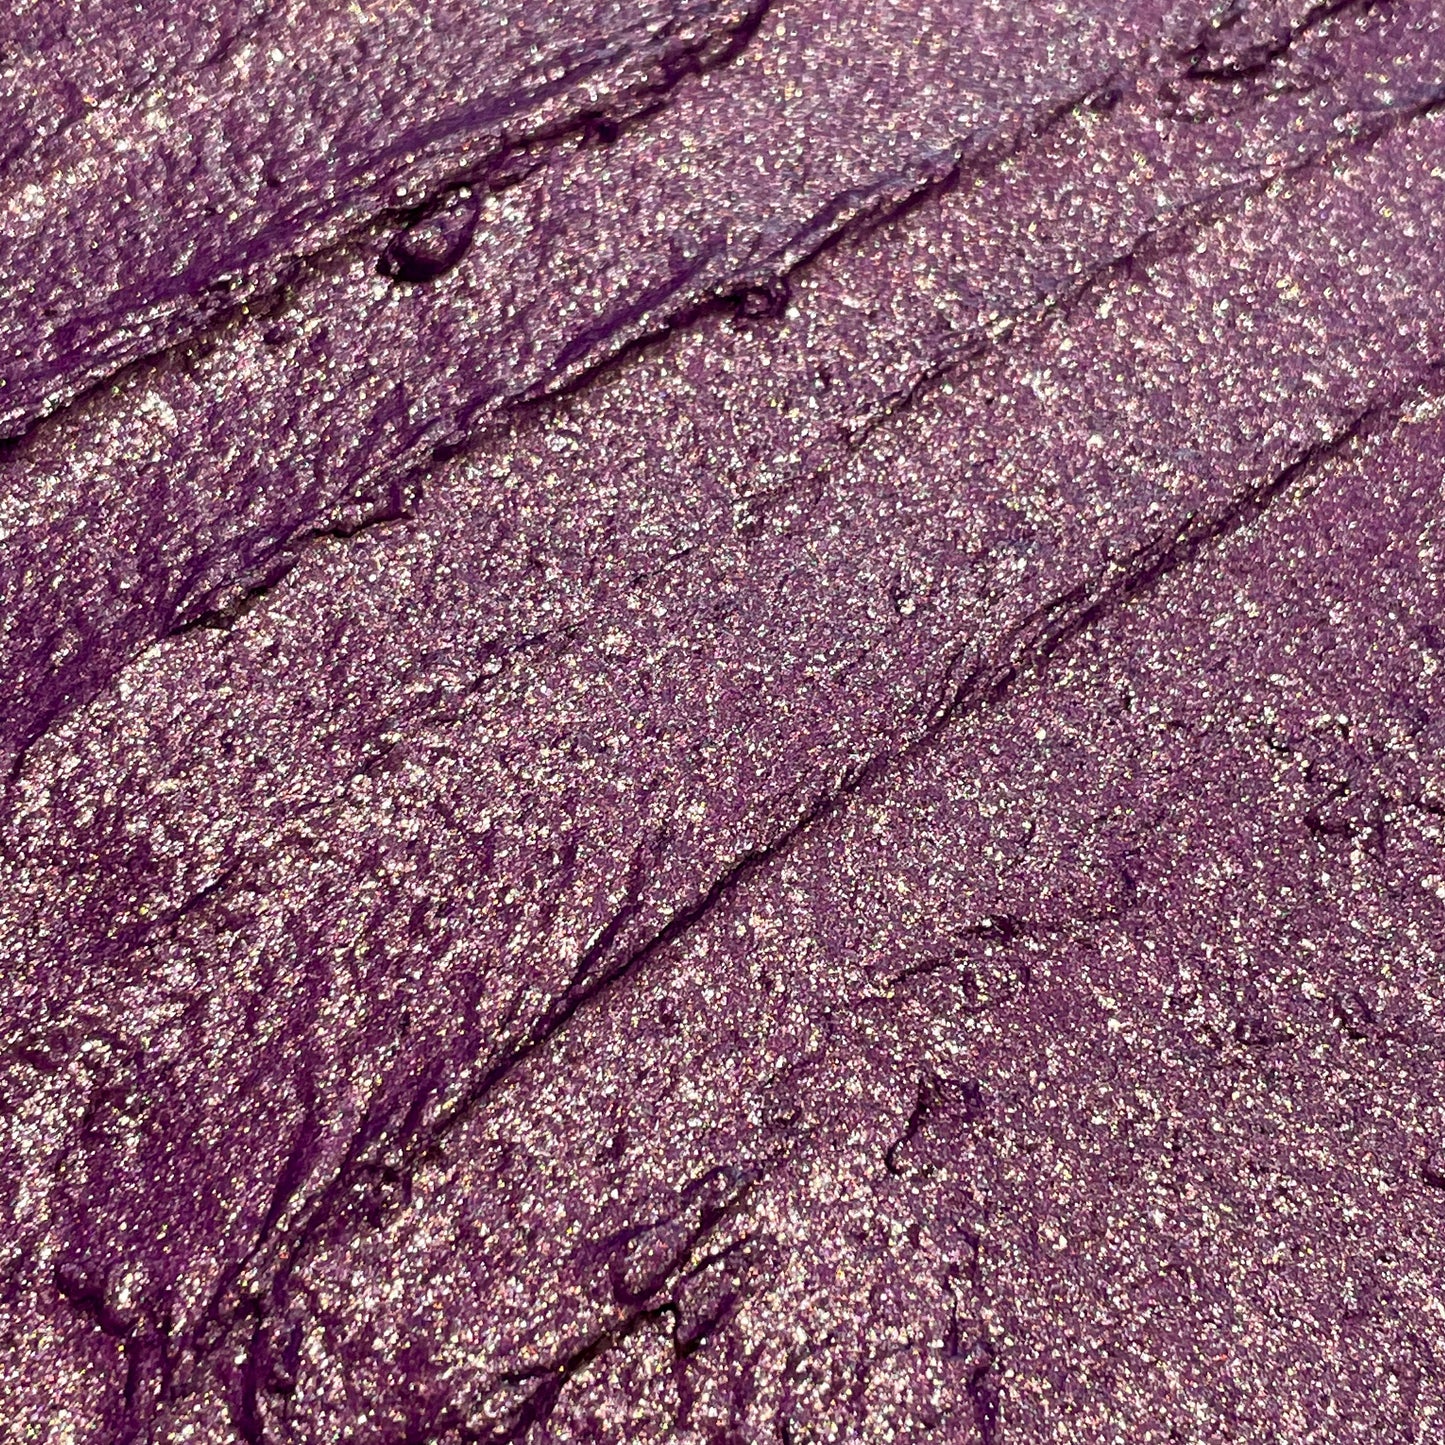 Mauve purple Half pan Bling Bling Handmade shimmer watercolor paints